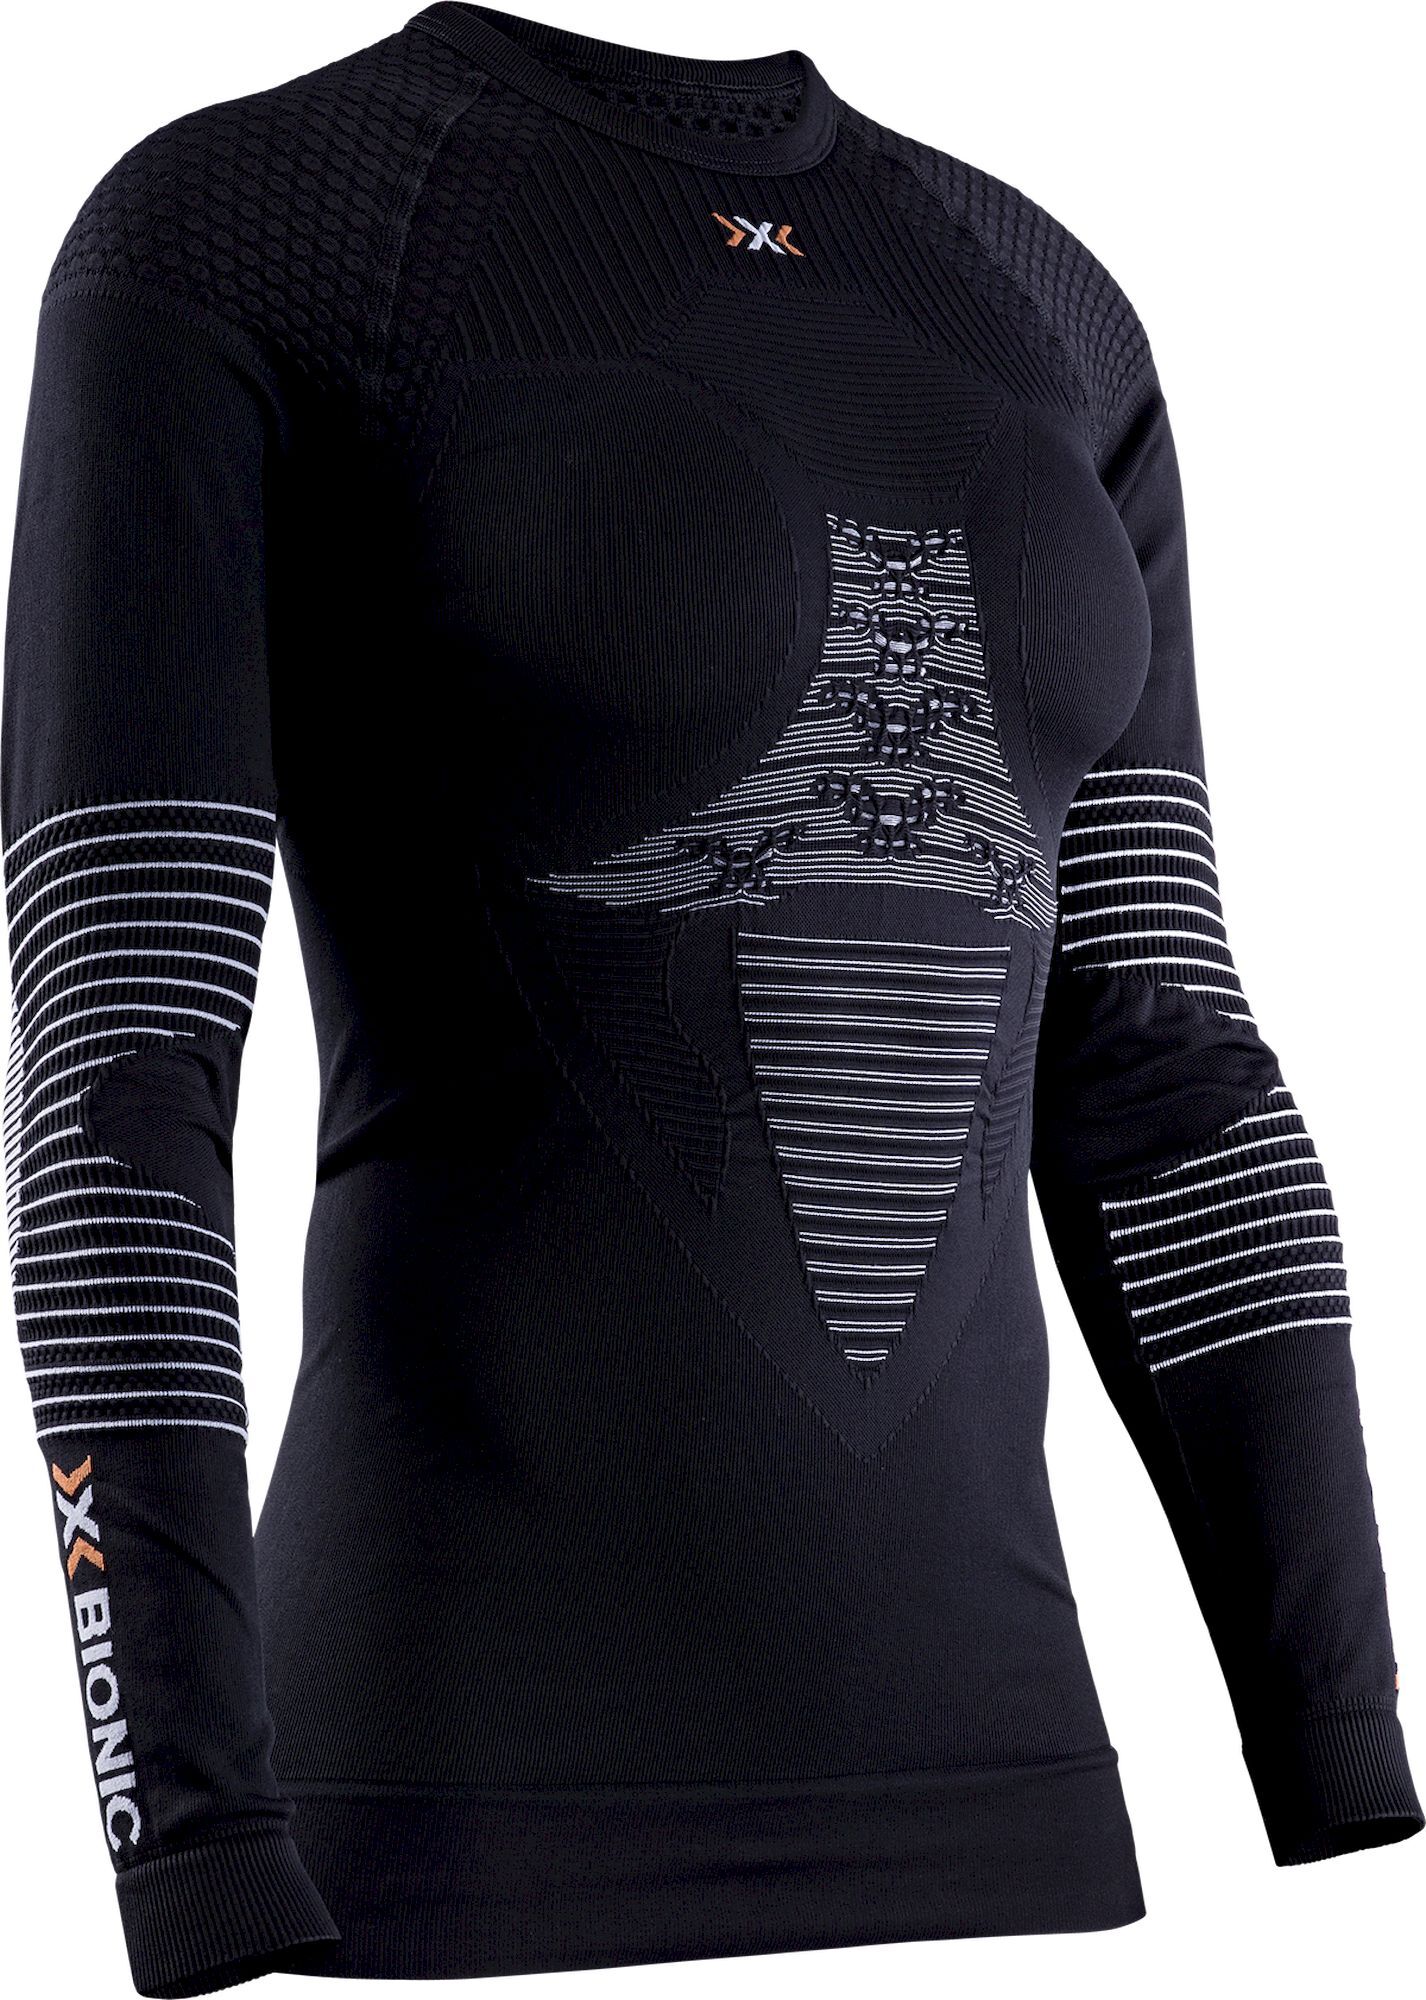 X-Bionic Energizer 4.0 Shirt Long Sleeve - Ropa interior - Mujer